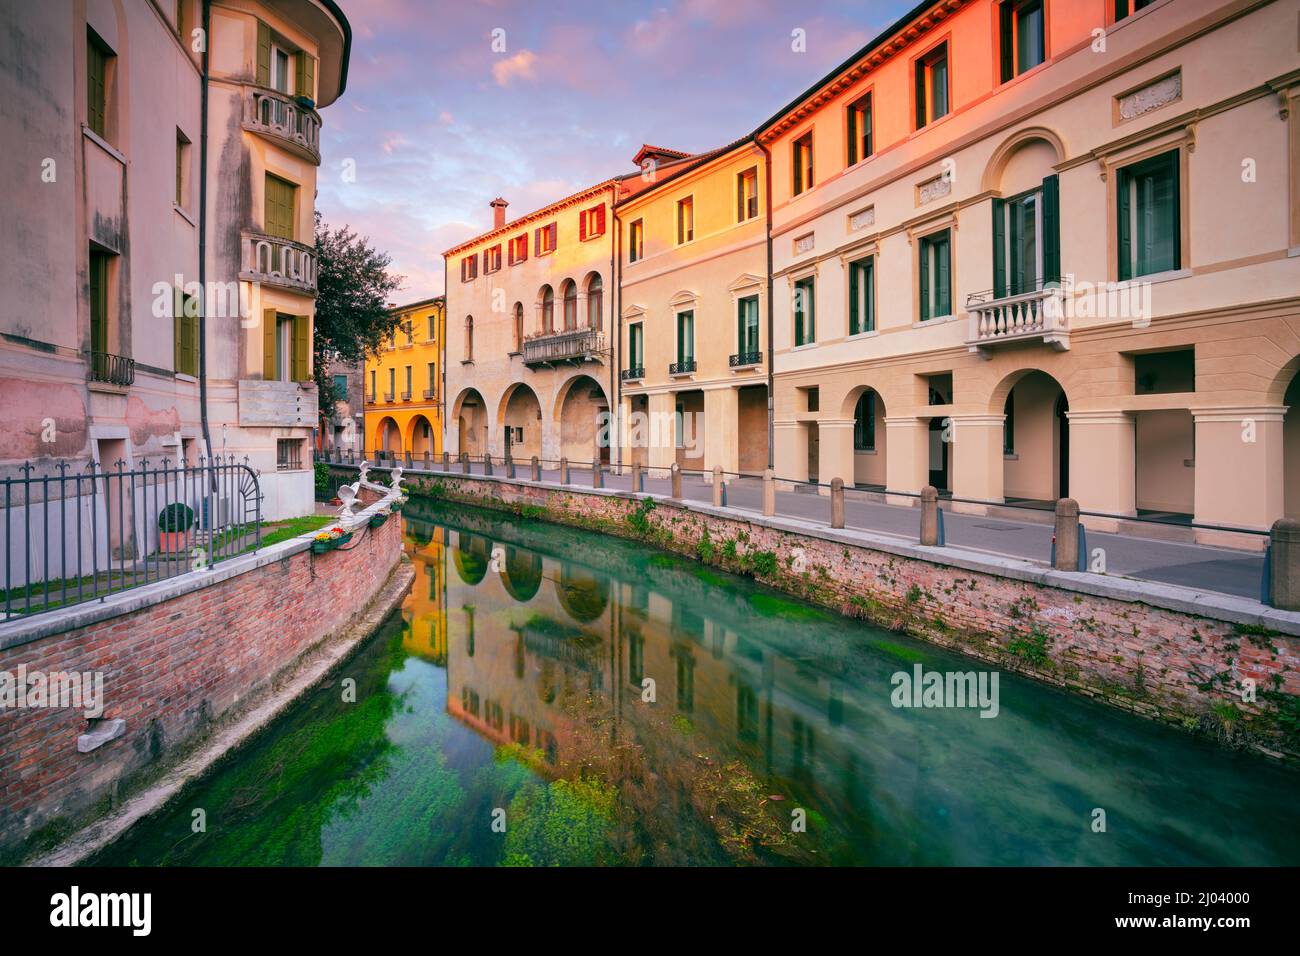 Treviso, Italia. Imagen del paisaje urbano del centro histórico de Treviso, Italia al amanecer. Foto de stock